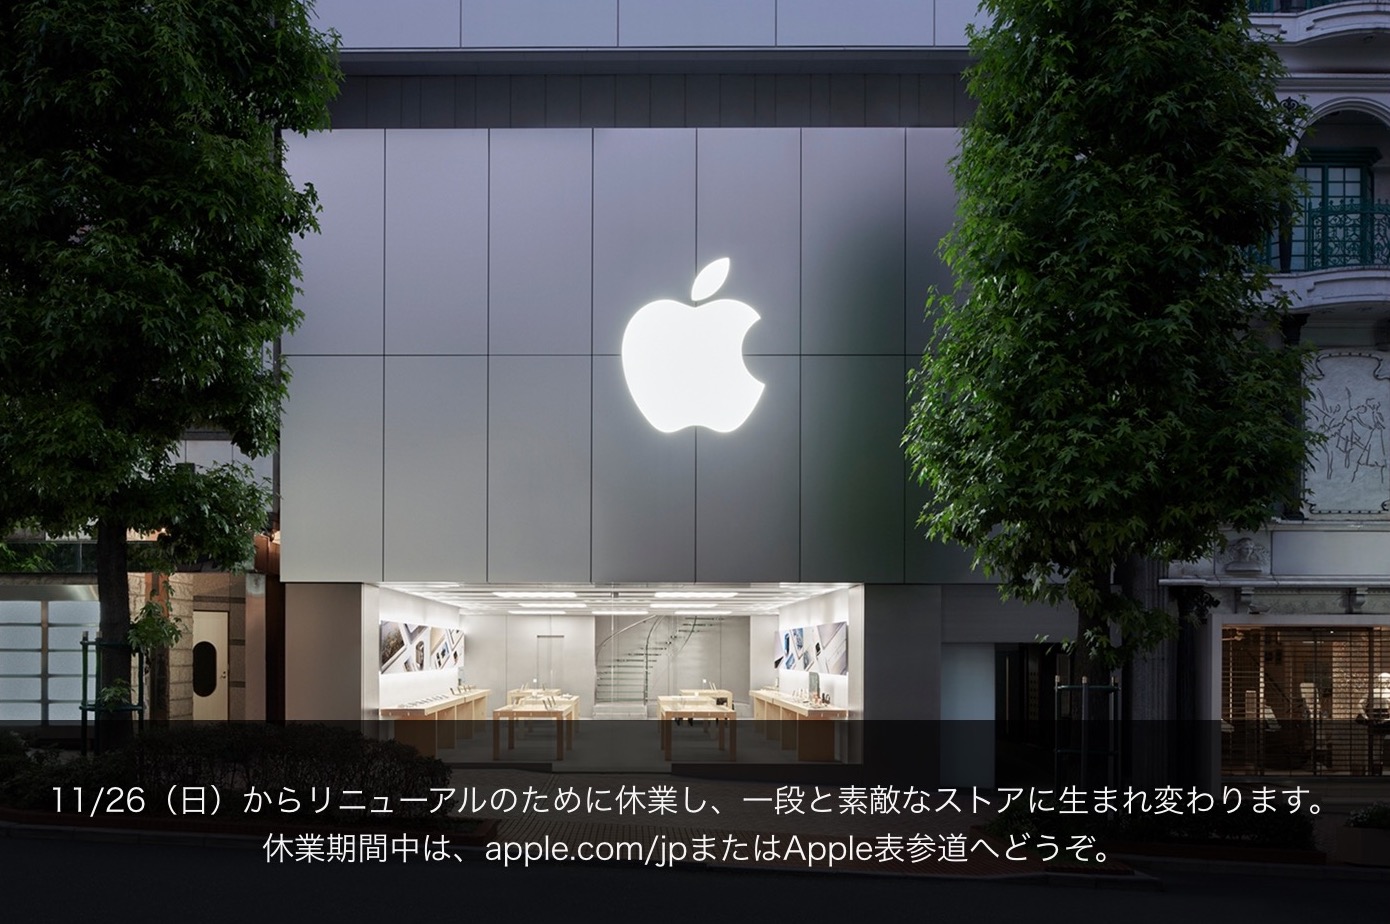 Apple Store渋谷が休業。2018年冬にリニューアルオープン